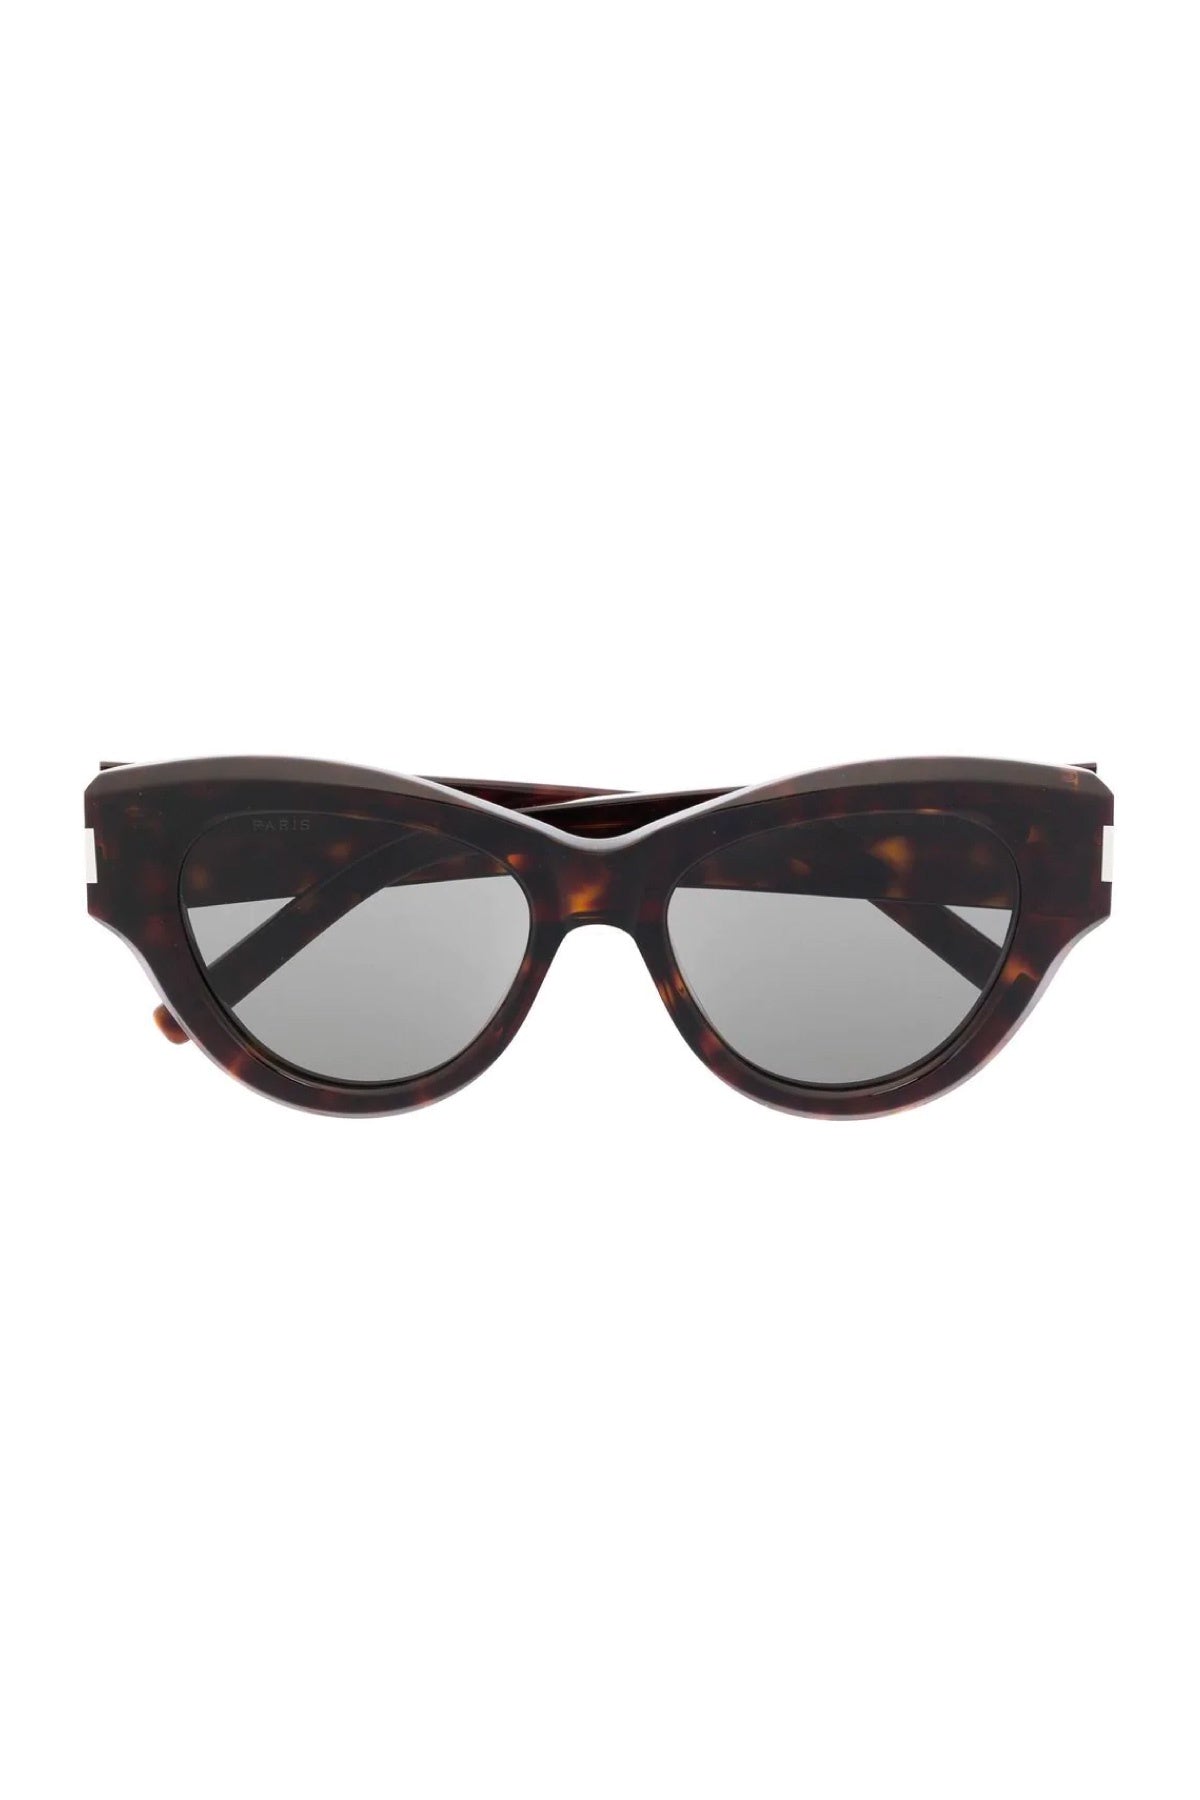 Saint Laurent Rounded Cat Eye Sunglasses - Havana